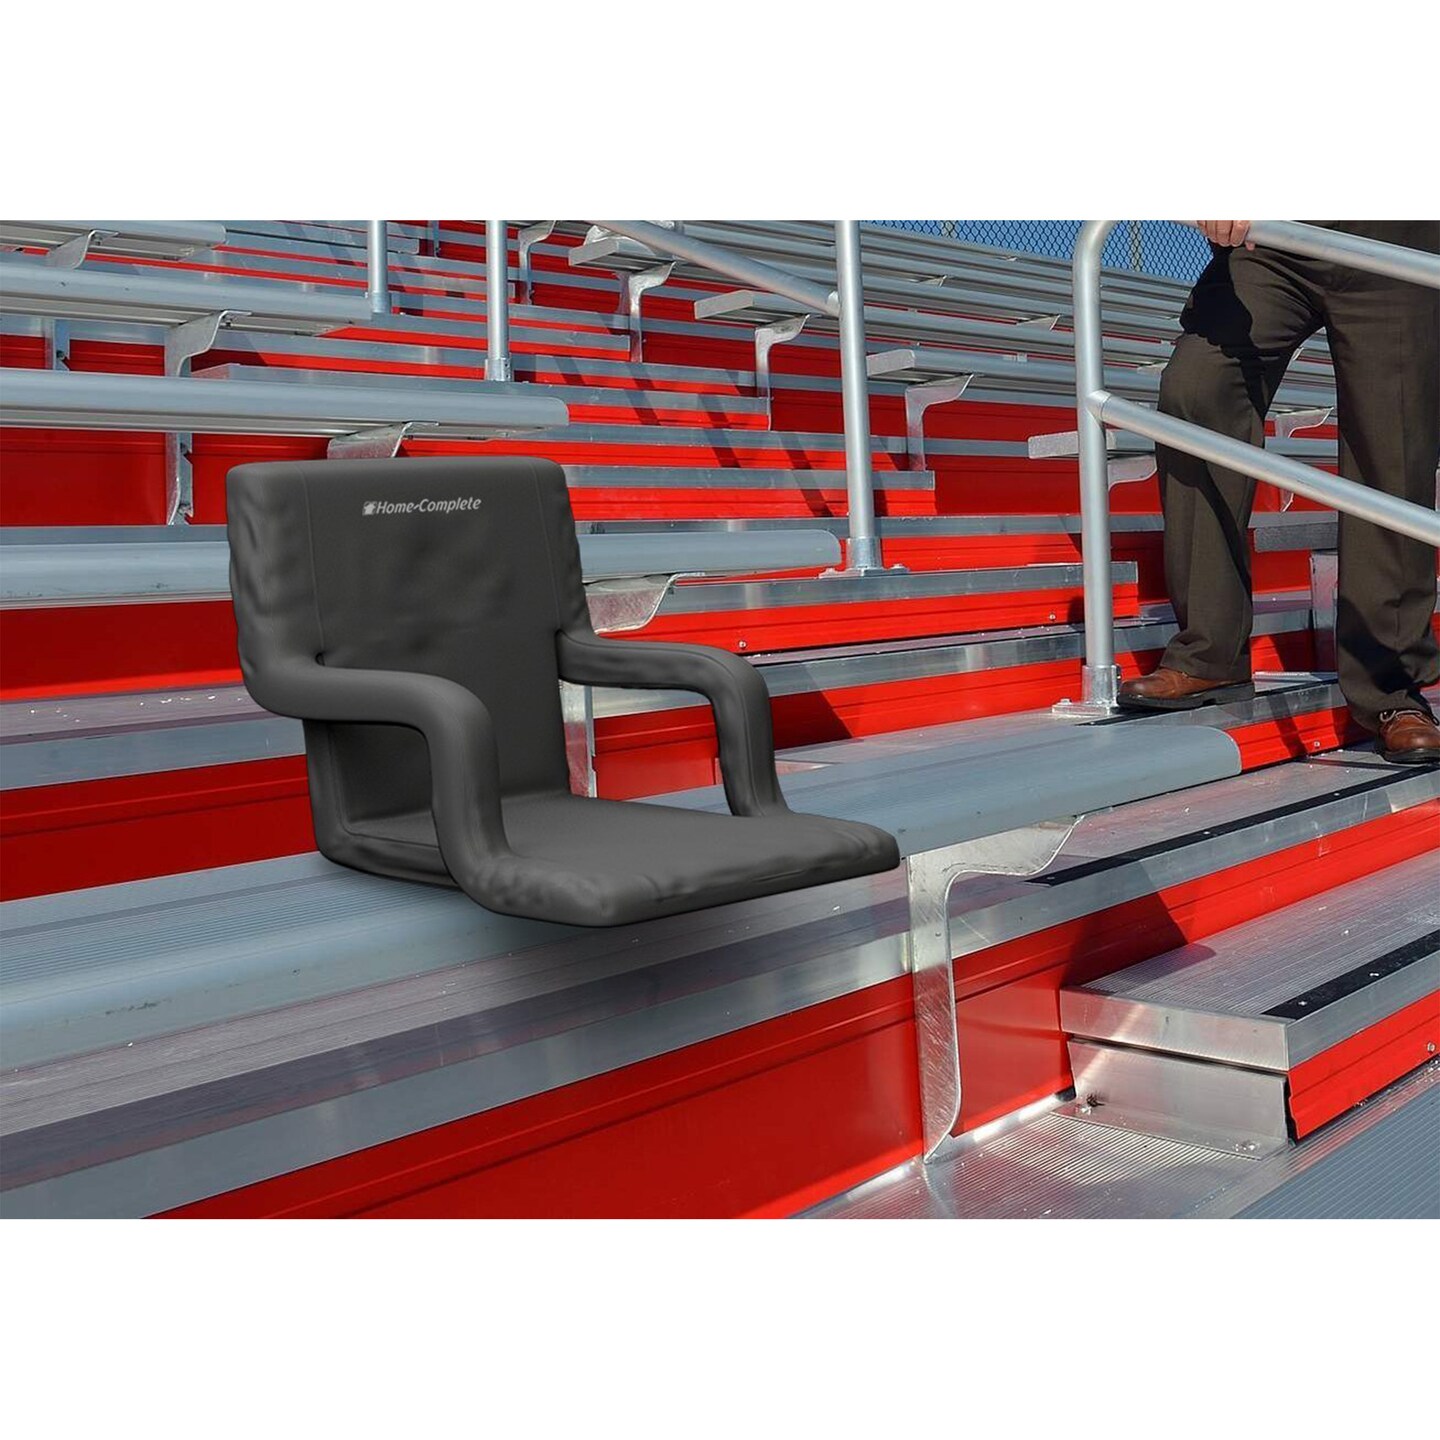 Best Bulk Custom Cushion Stadium Seat Supplier